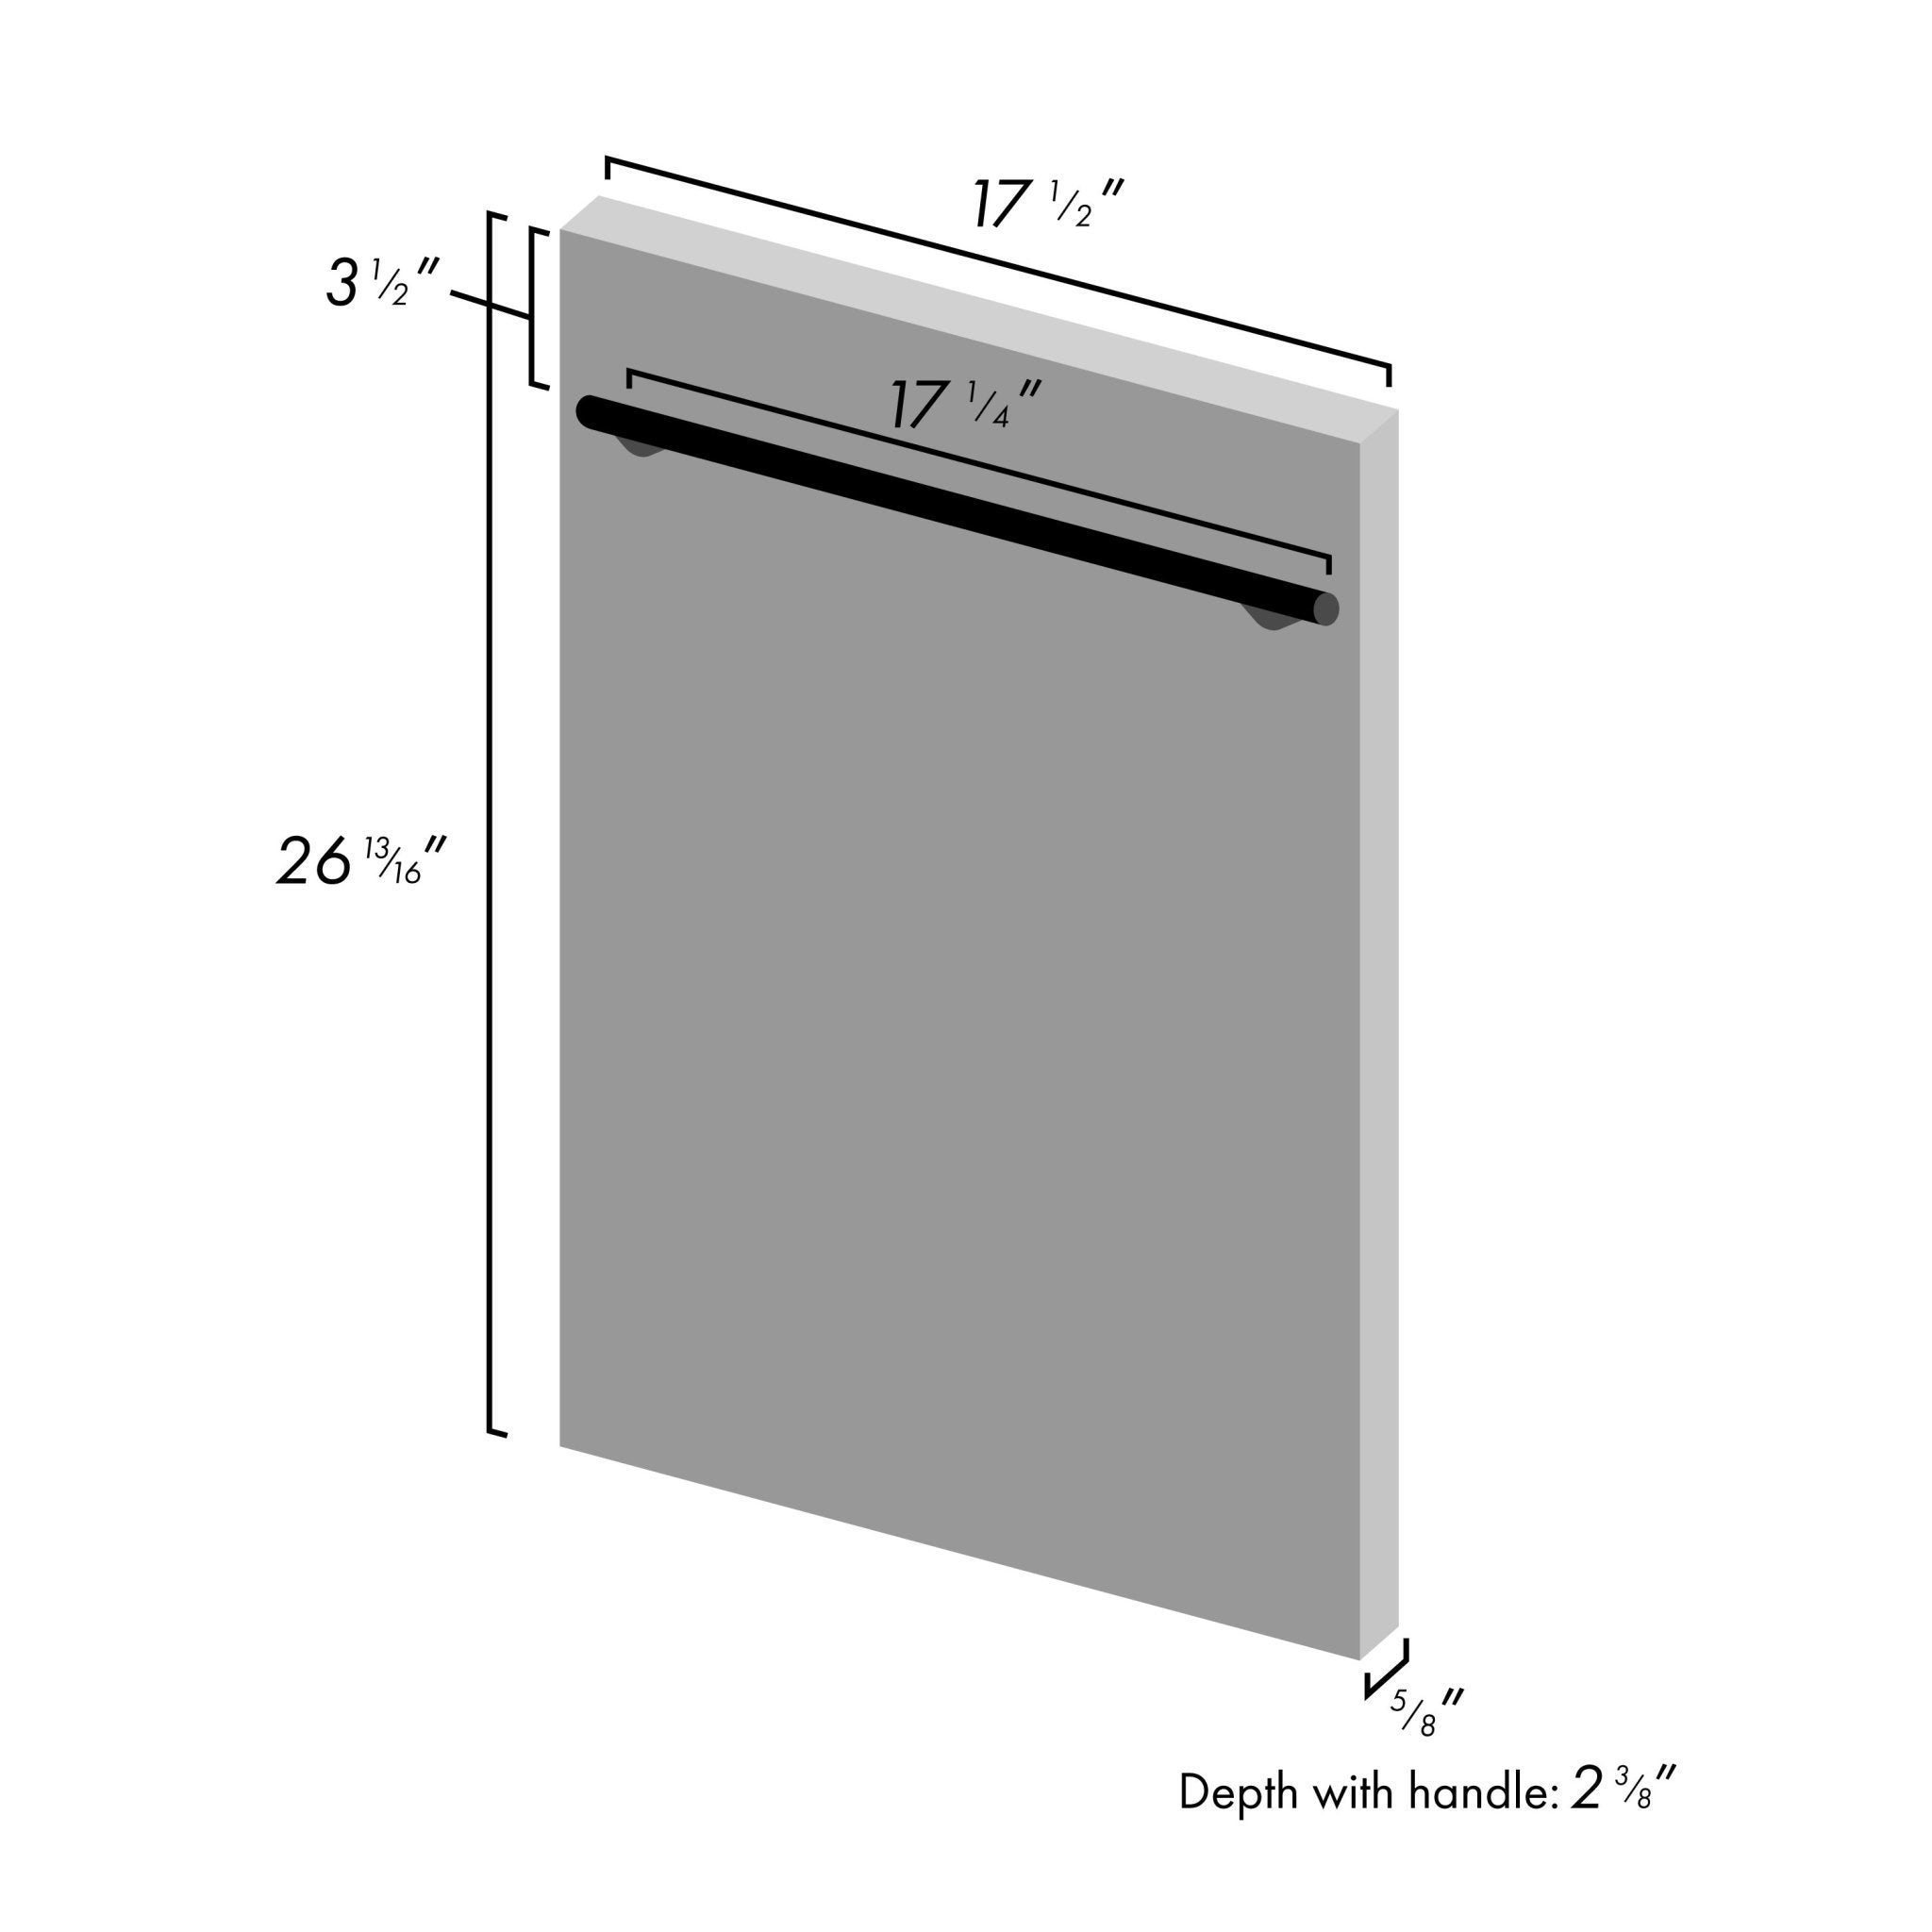 ZLINE 18" Dishwasher Panel with Modern Handle